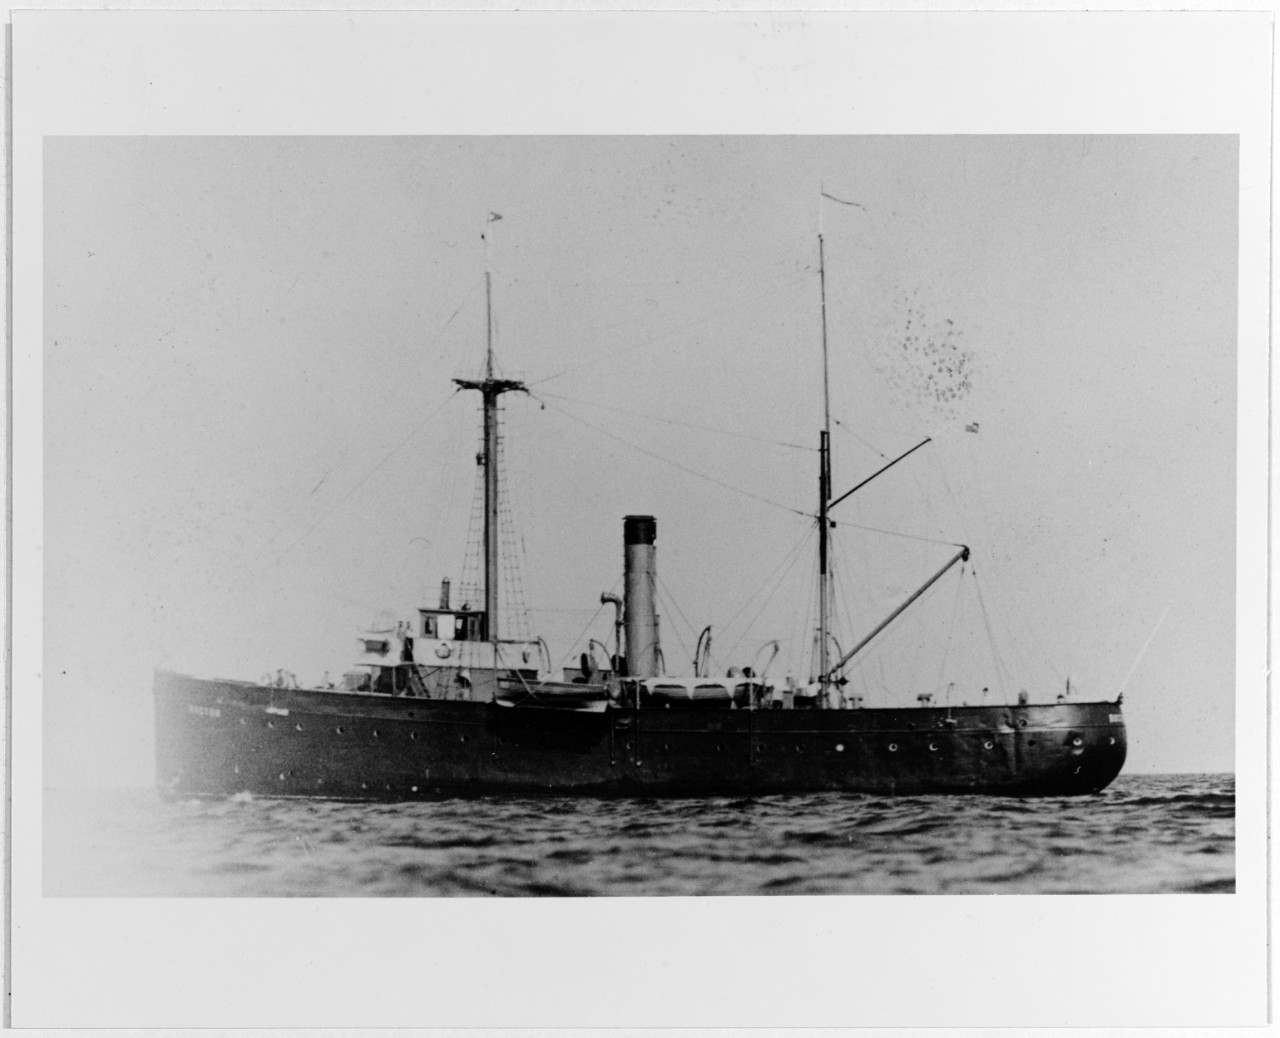 VOSTOK (Soviet Surveying vessel, 1910-circa 1945)